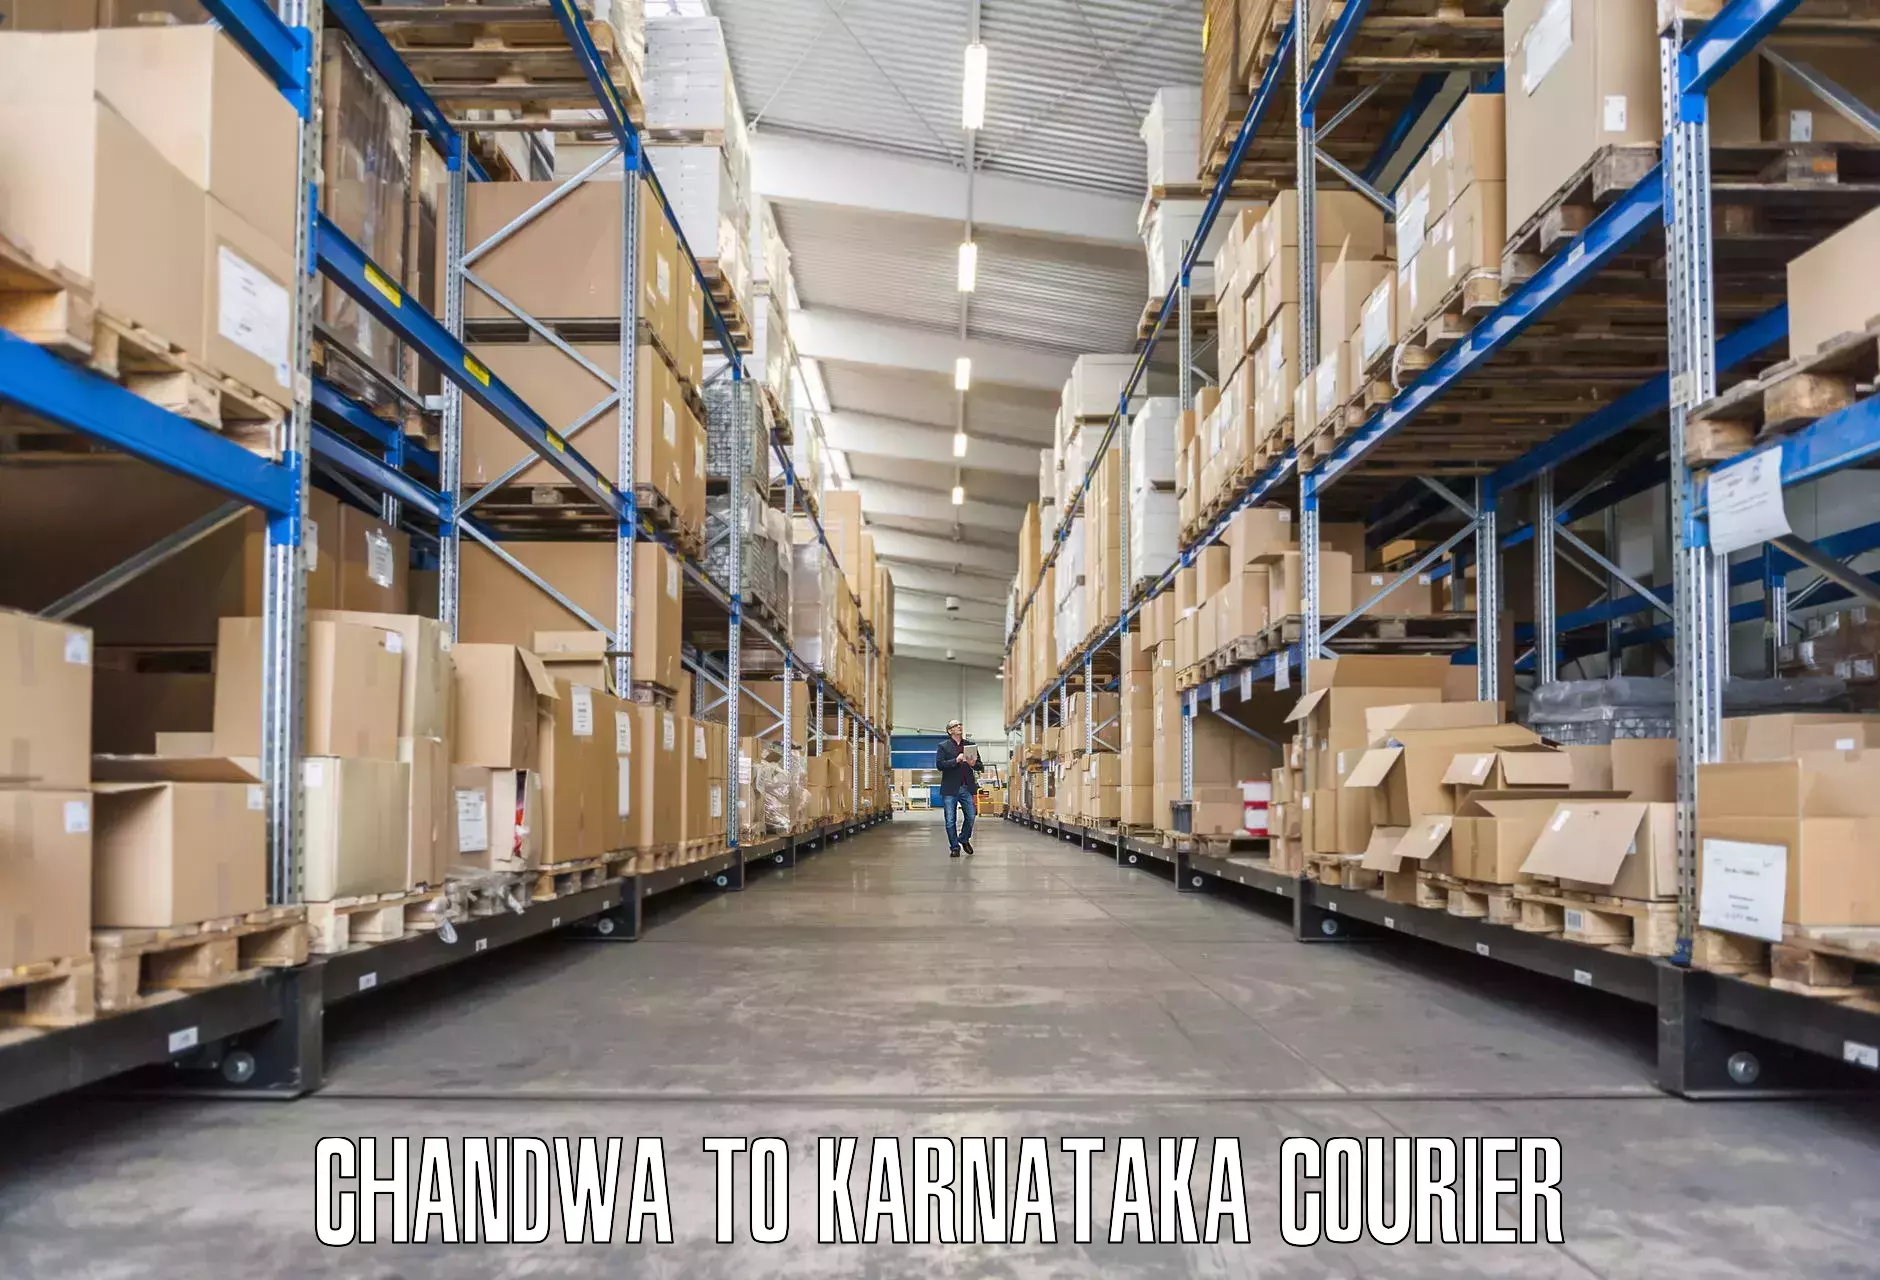 Professional moving company Chandwa to Dakshina Kannada